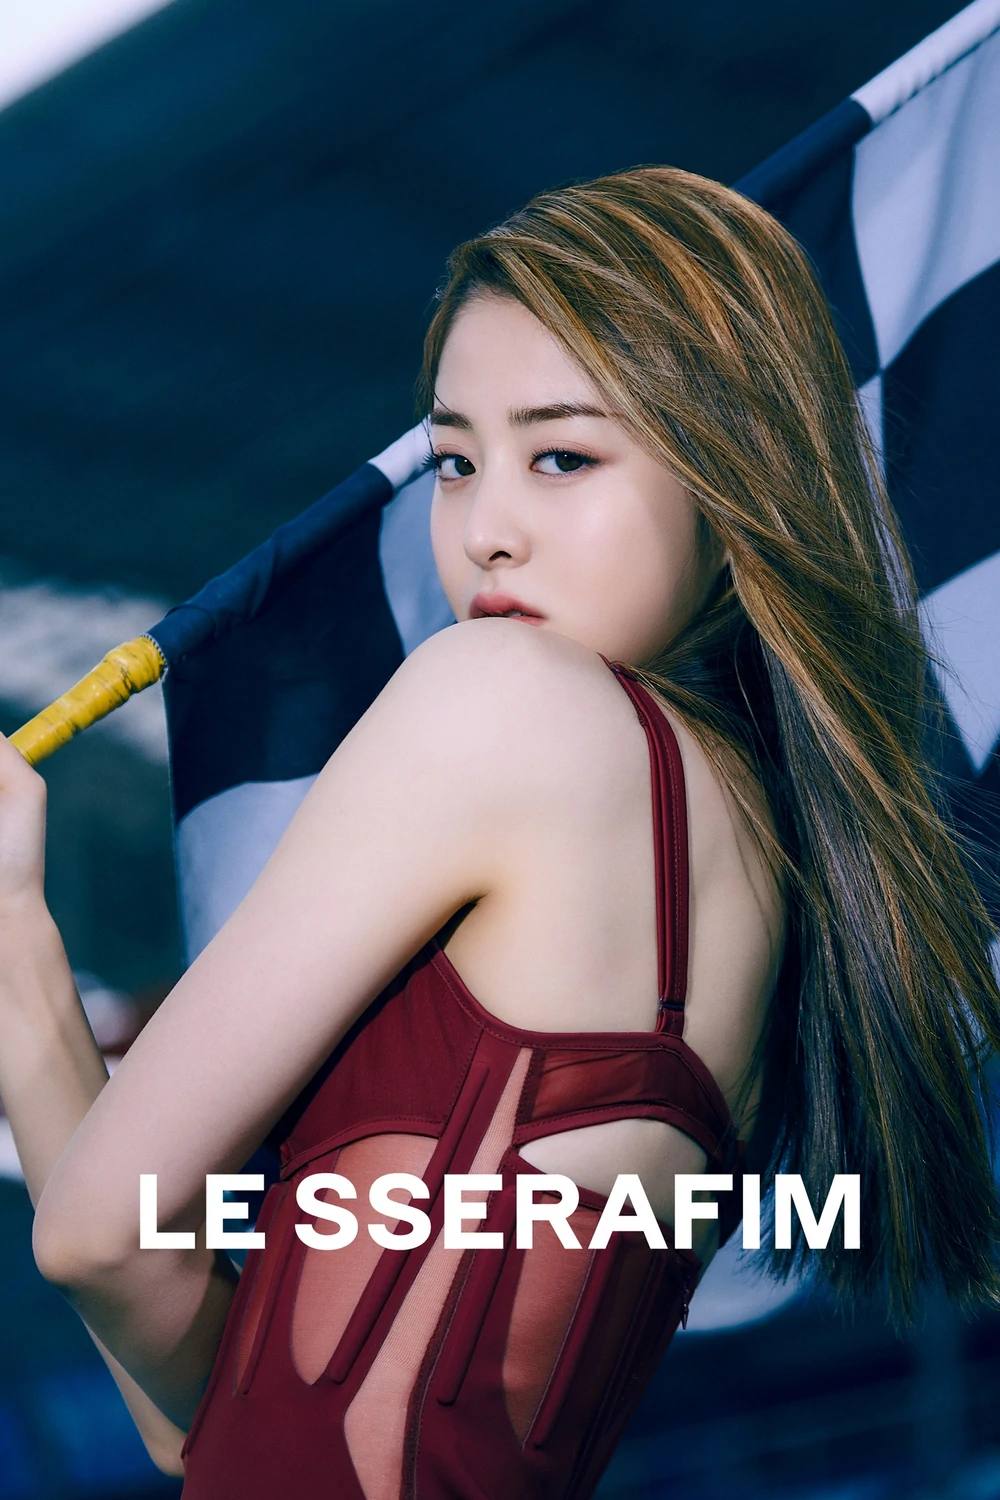 Le Sserafim I'm Fearless Yunjin Concept Teaser Picture Image Photo Kpop K-Concept 2